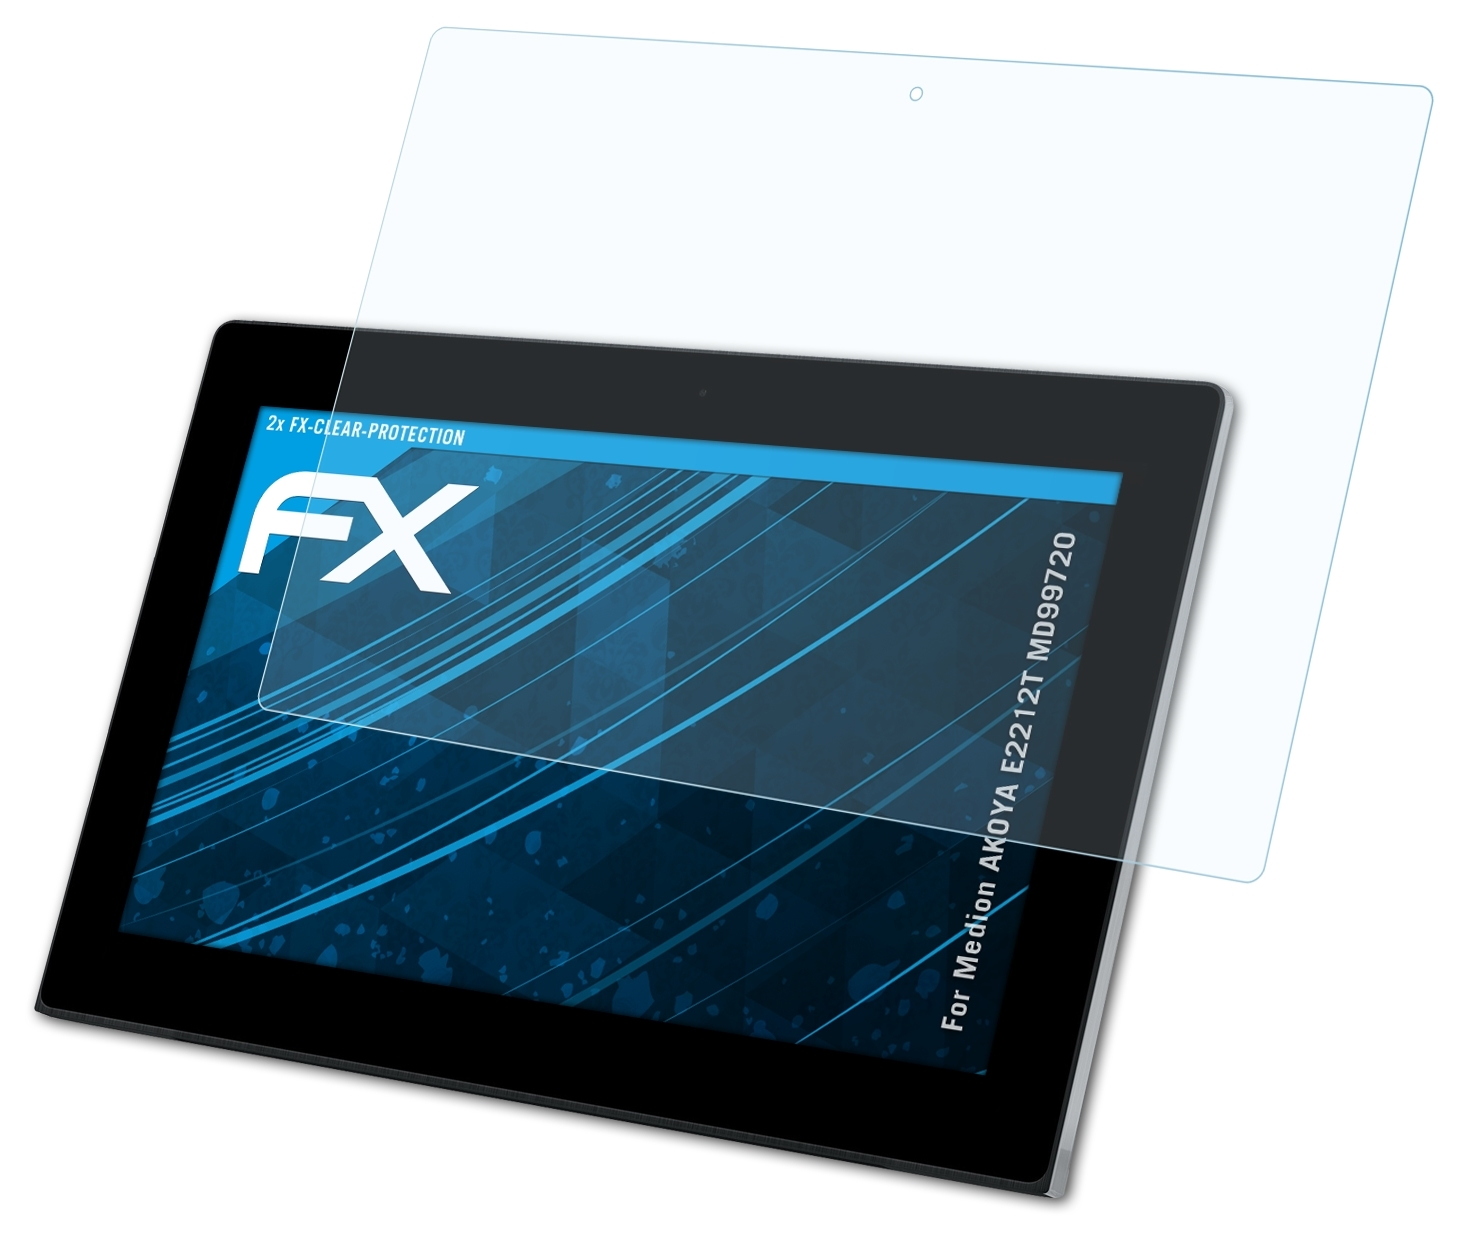 AKOYA FX-Clear 2x ATFOLIX (MD99720)) Medion E2212T Displayschutz(für